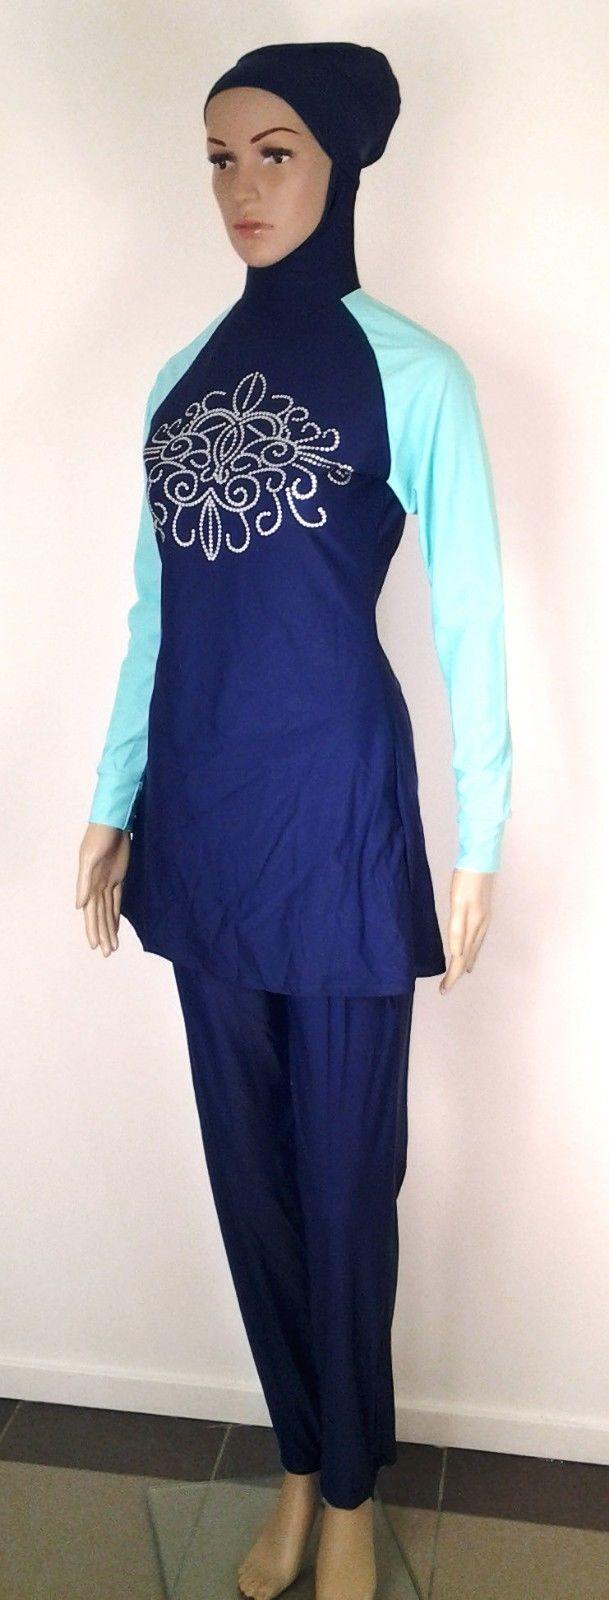 NEW Muslim Islamic Full Cover Swimwear Beach Wear Costumes S-3XL - Arabian Shopping Zone